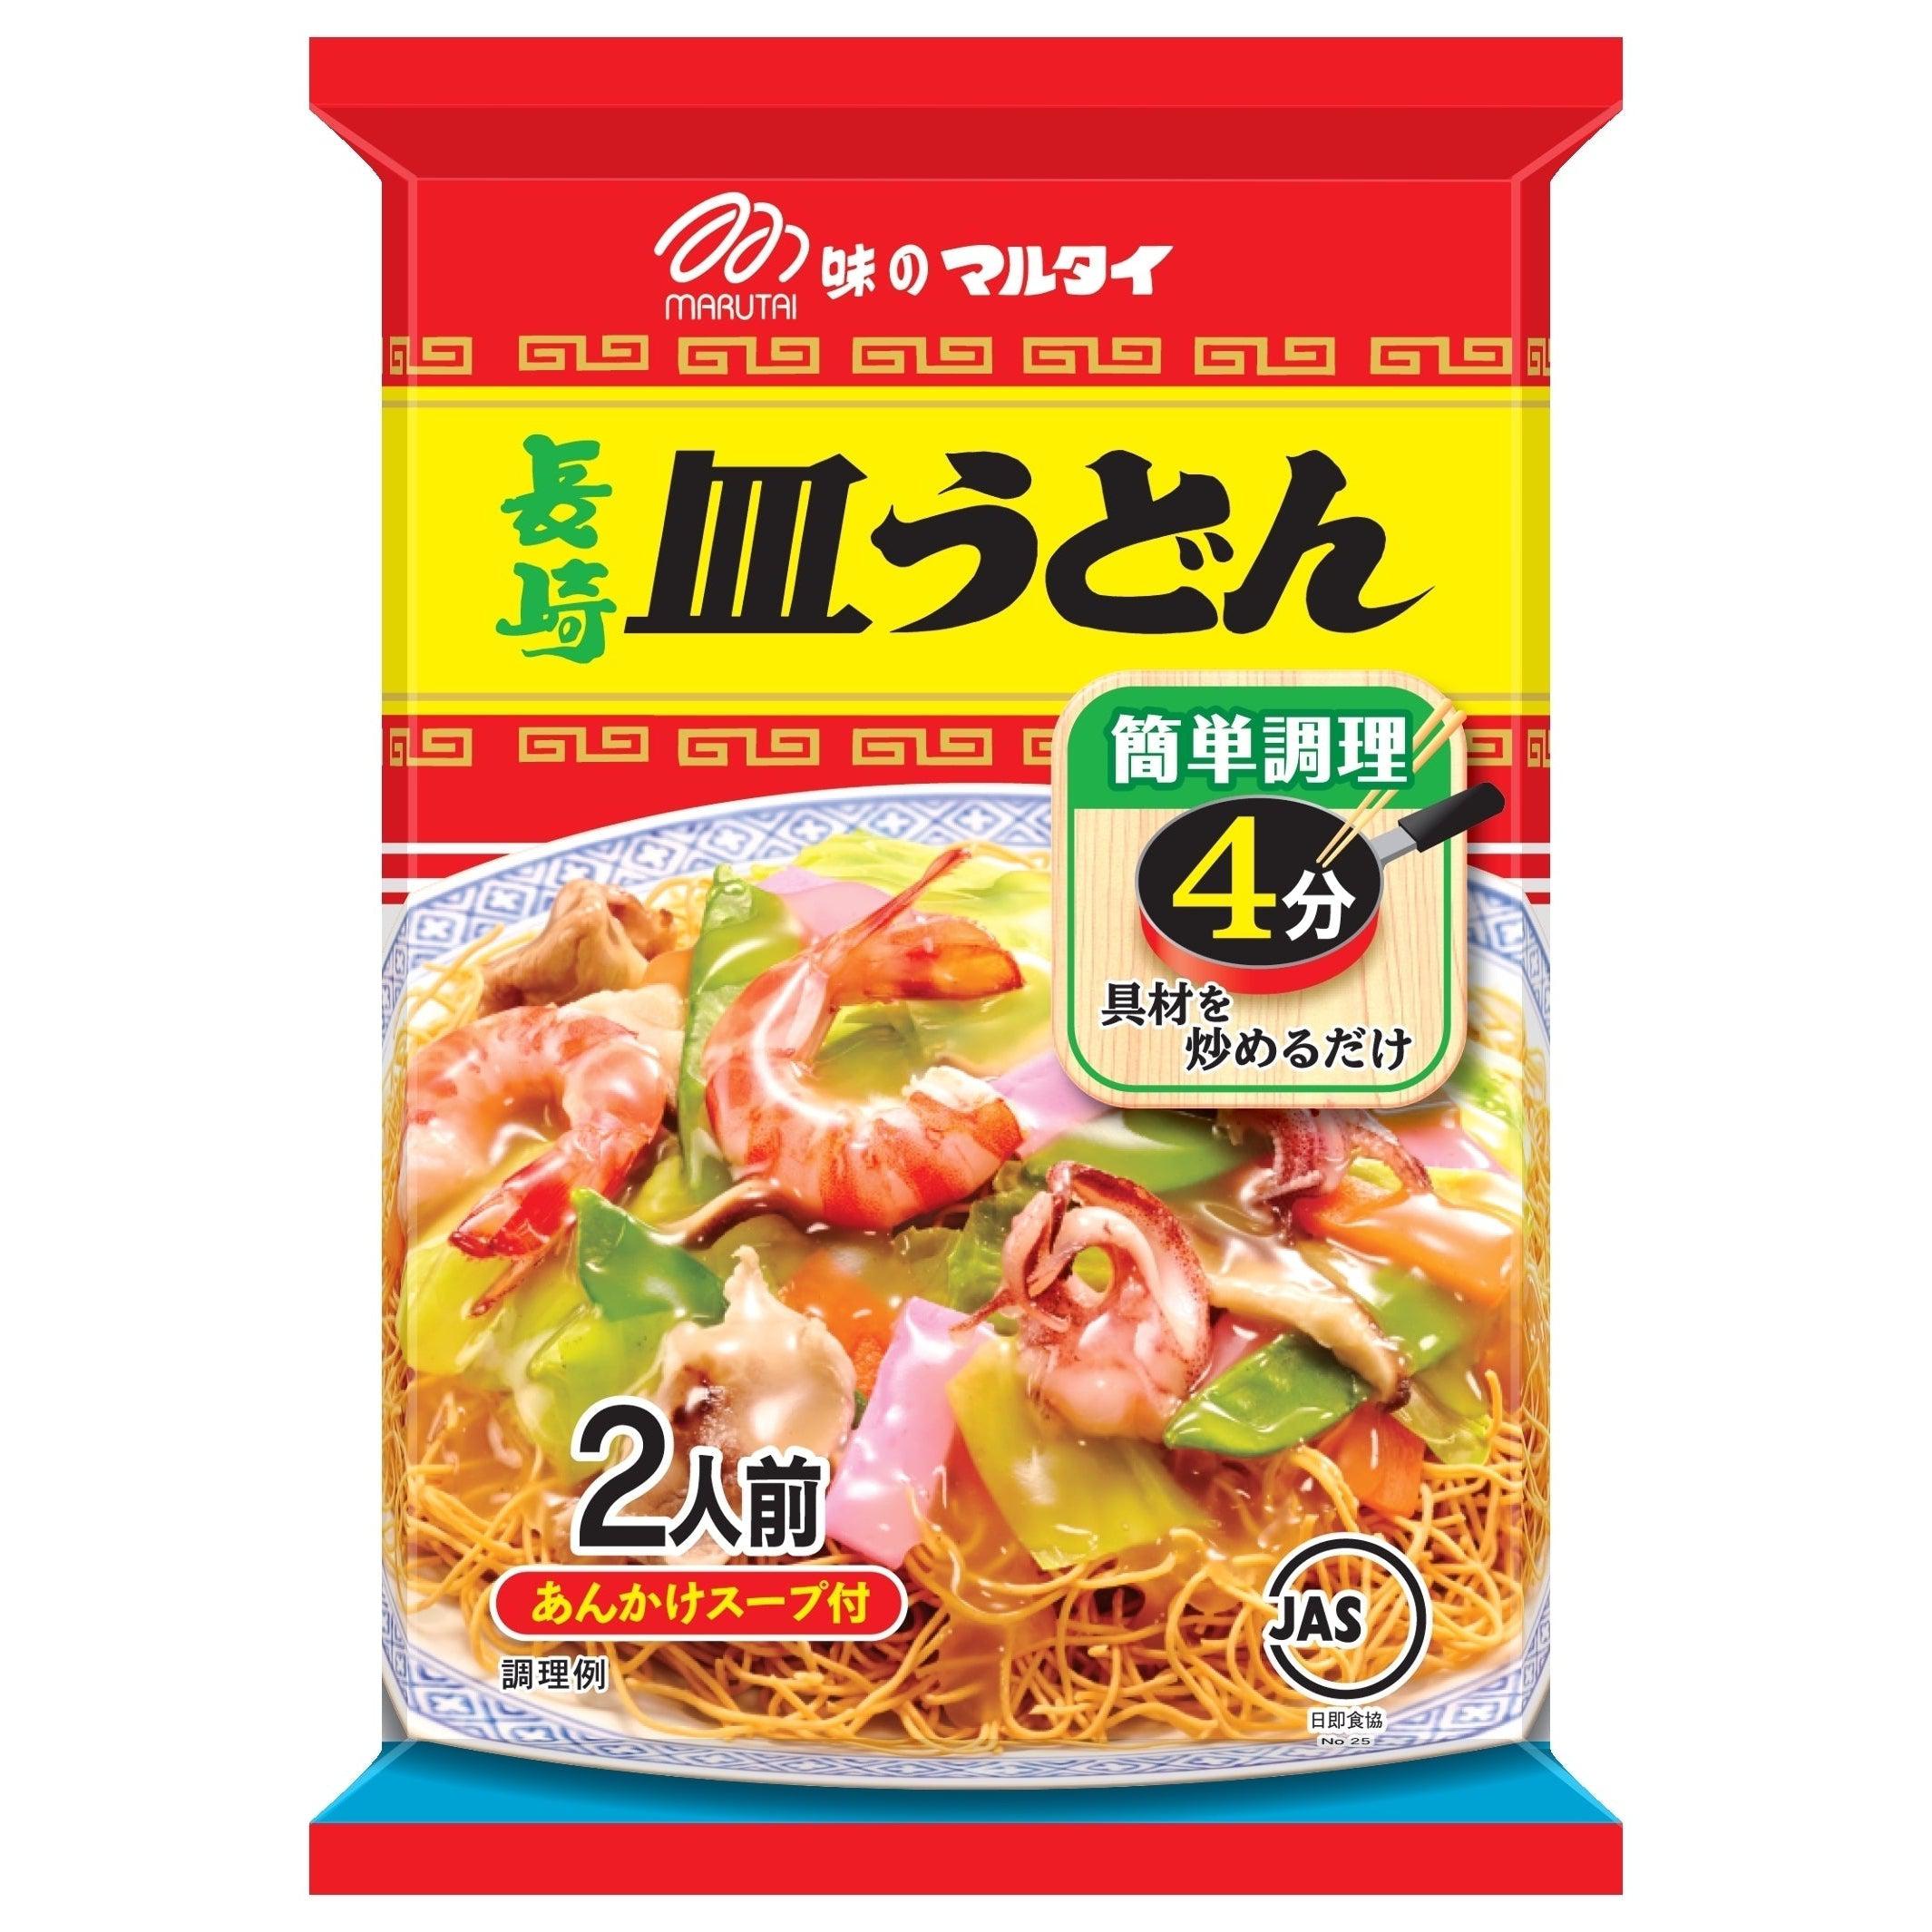 Marutai Nagasaki Sara Udon Instant Crispy Noodles 140g (Pack of 3)